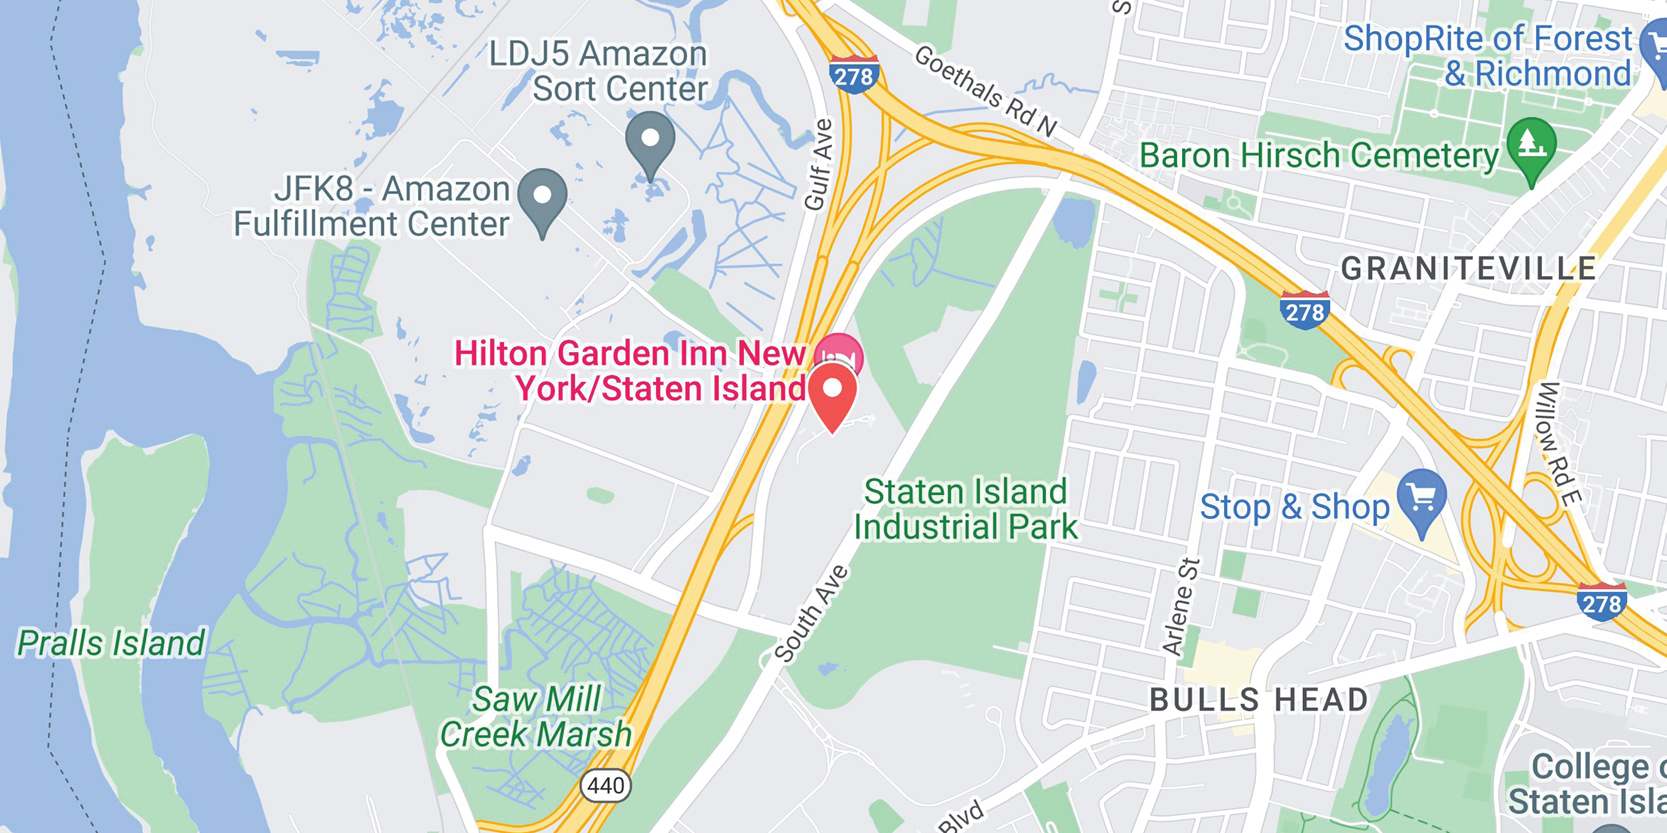 Staten Island Office Location